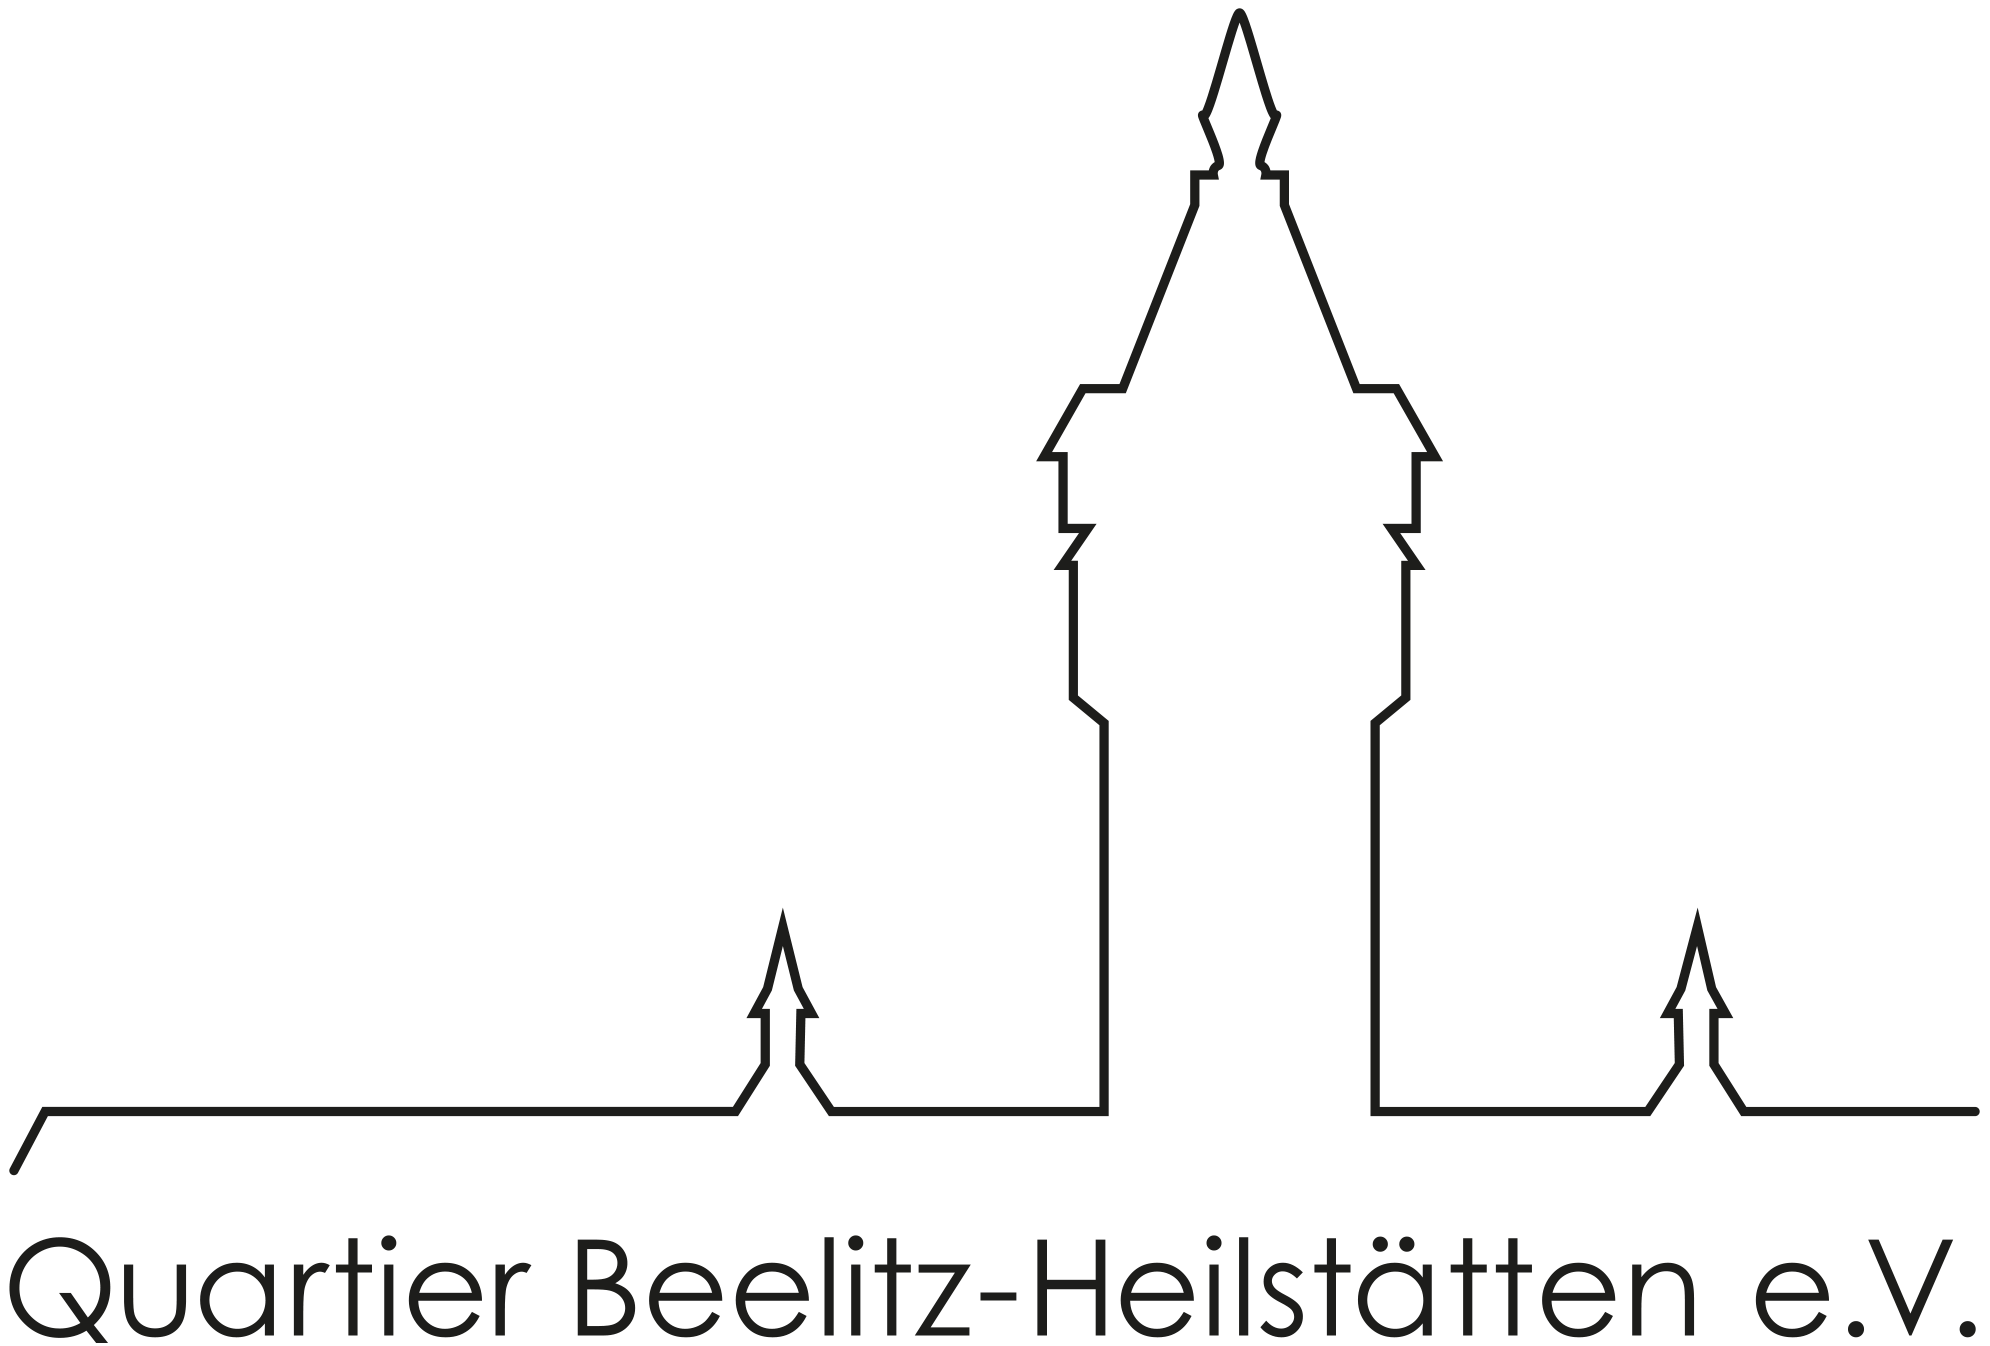 Logo Quartier Beelitz-Heilstätten